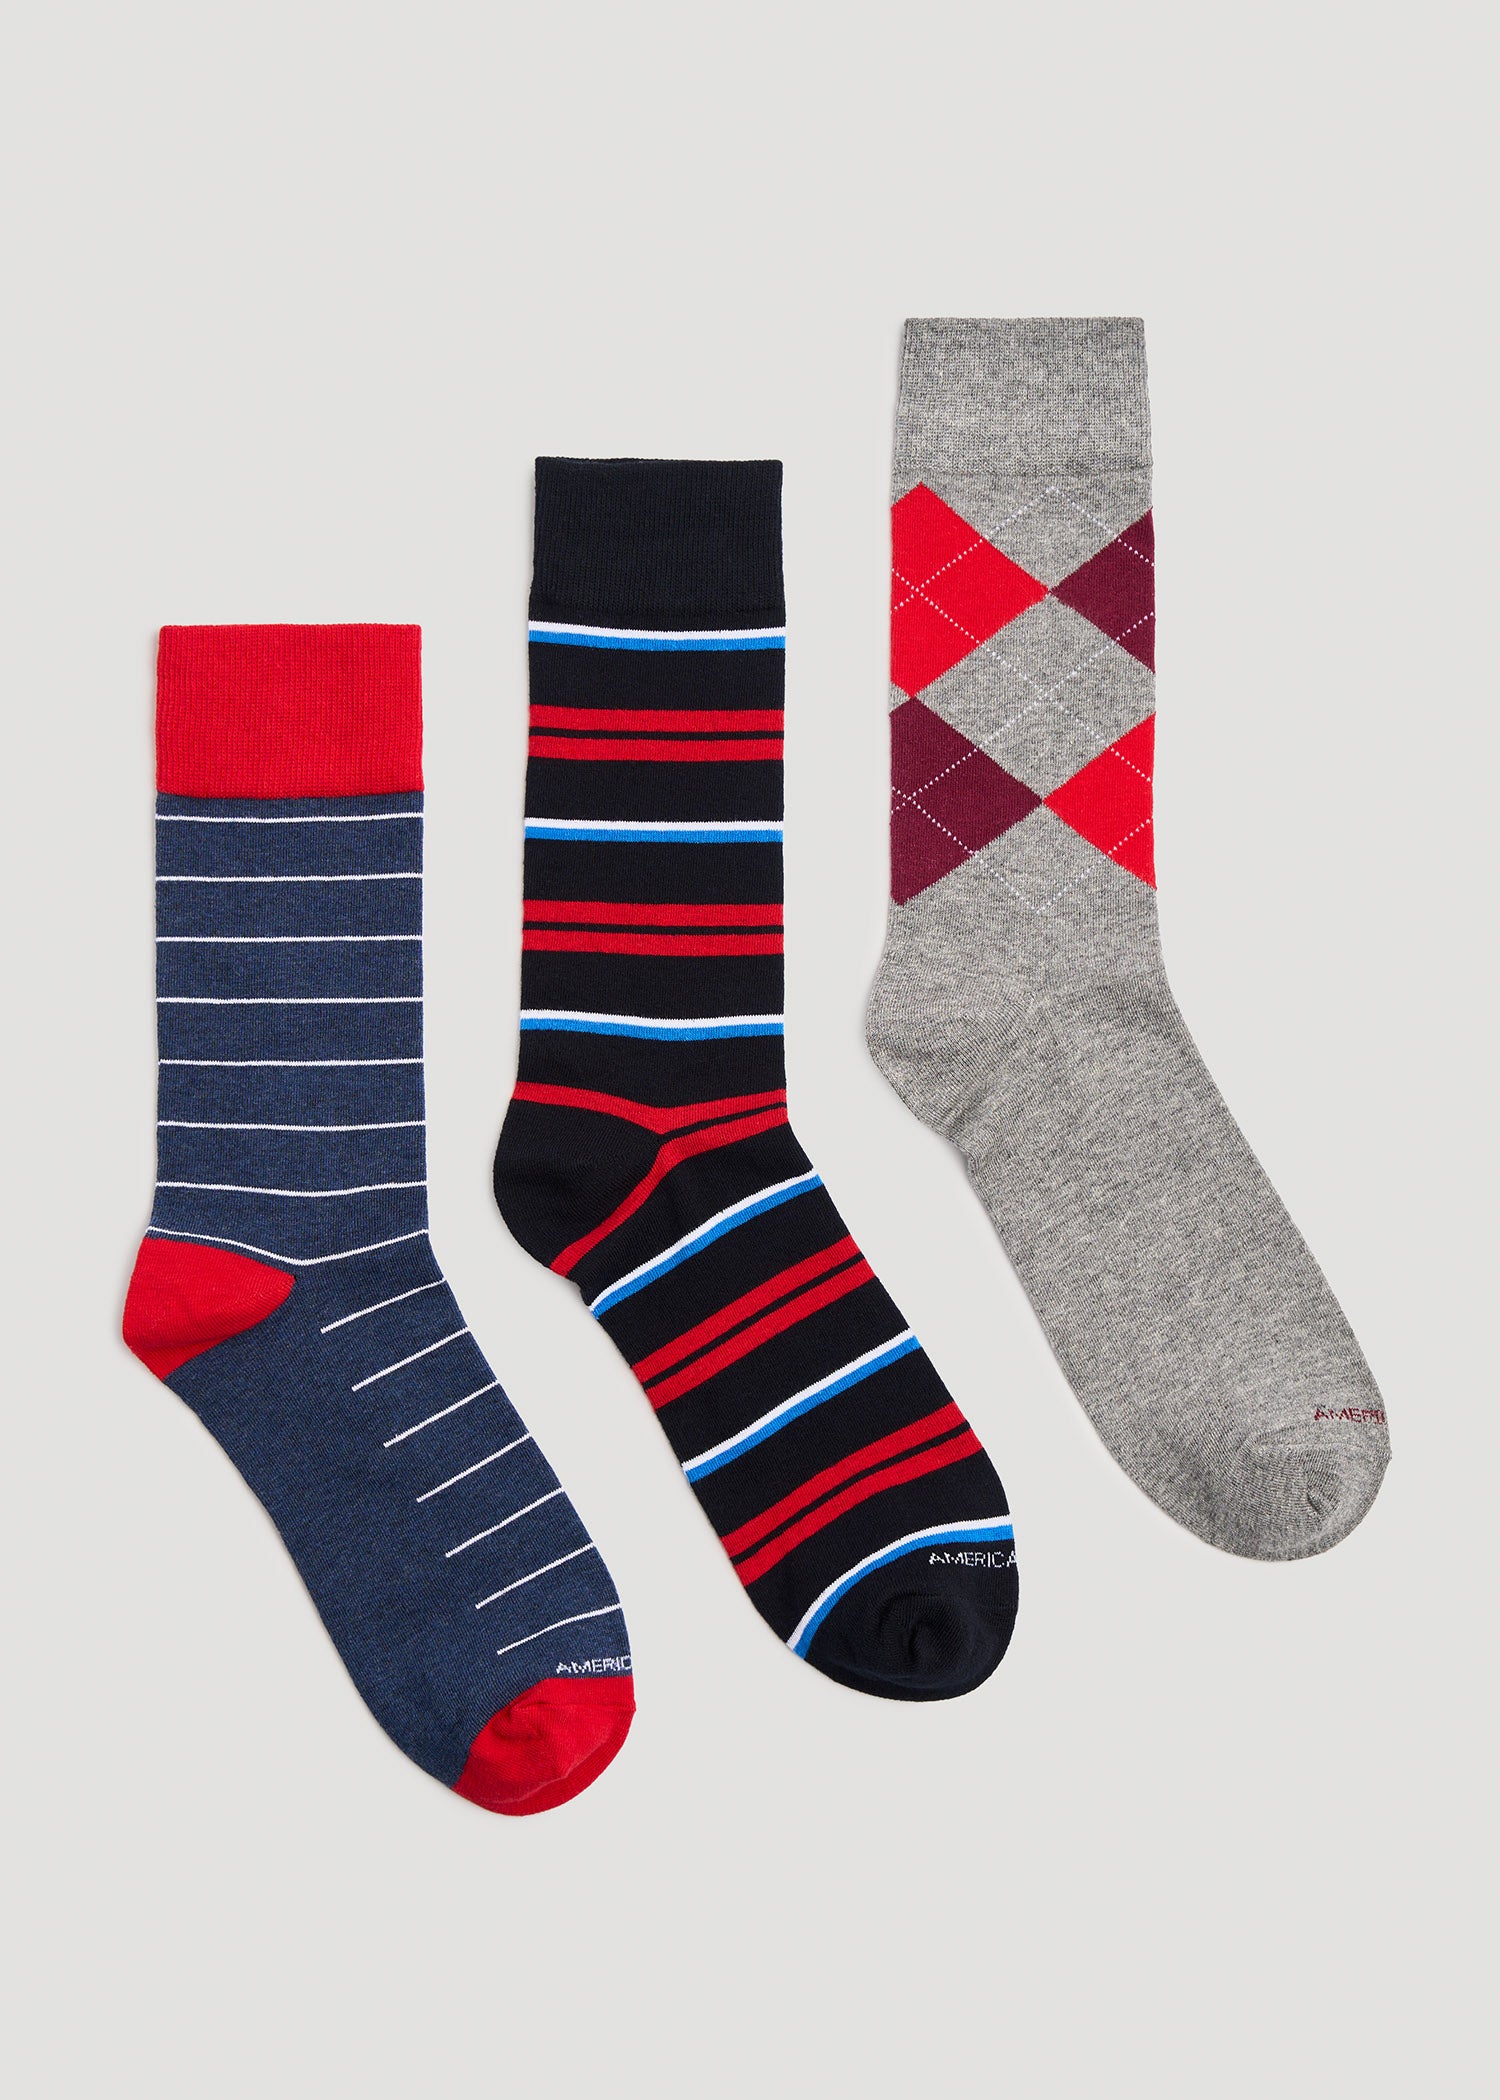 Tommy Hilfiger Men's Trouser Socks One Size 6-10